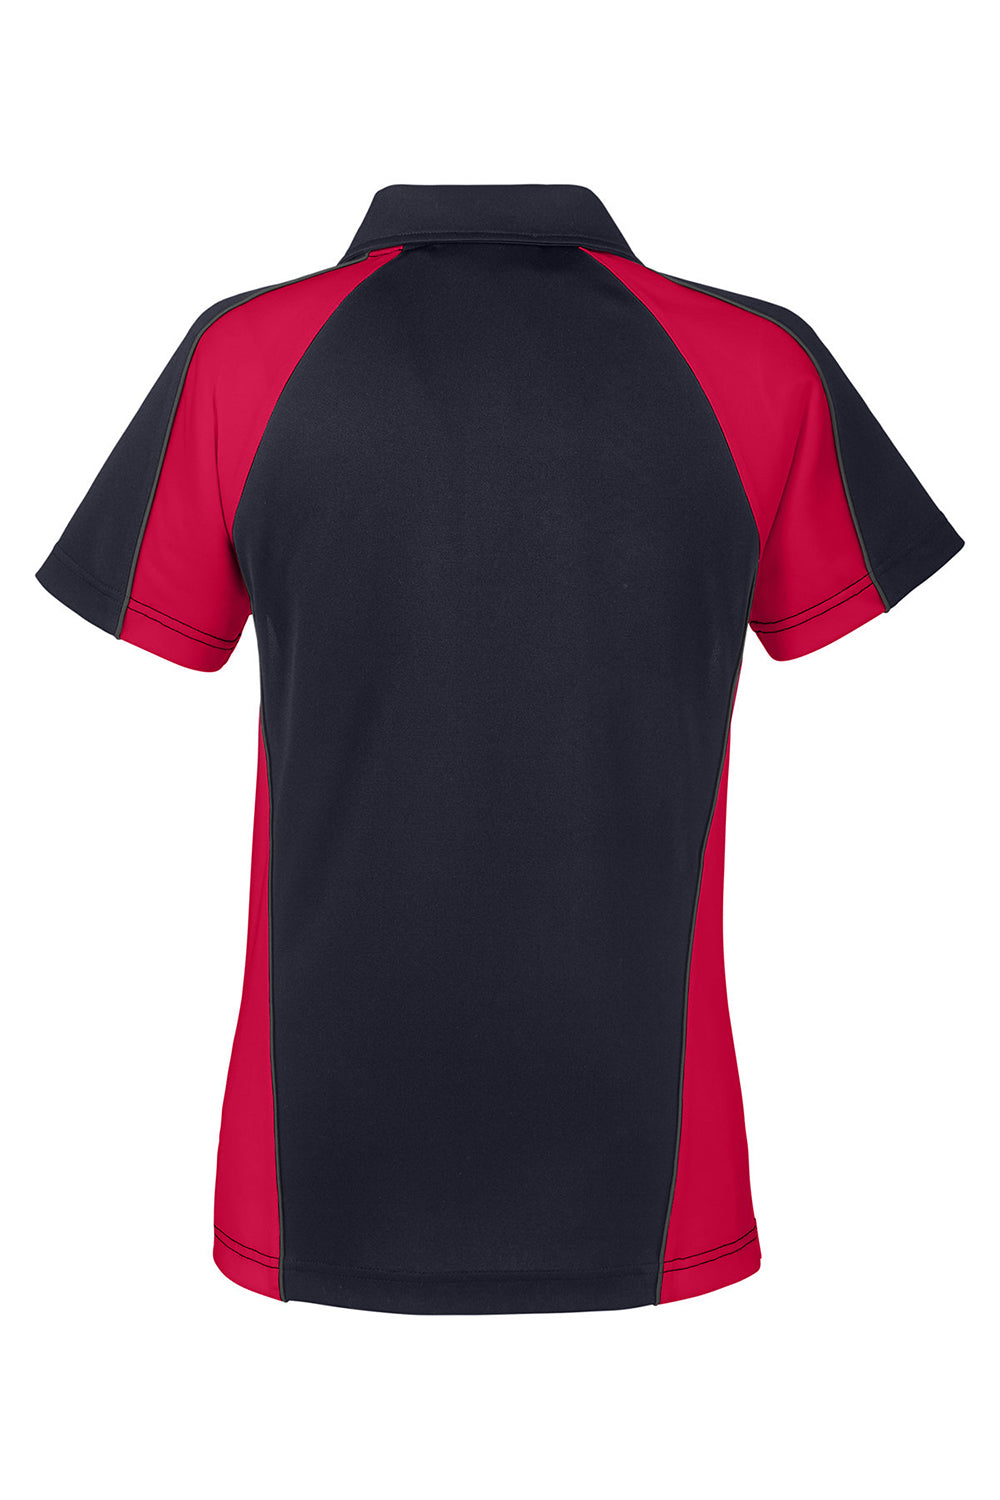 Harriton M385W Womens Advantage Performance Moisture Wicking Colorblock Short Sleeve Polo Shirt Black/Red Flat Back